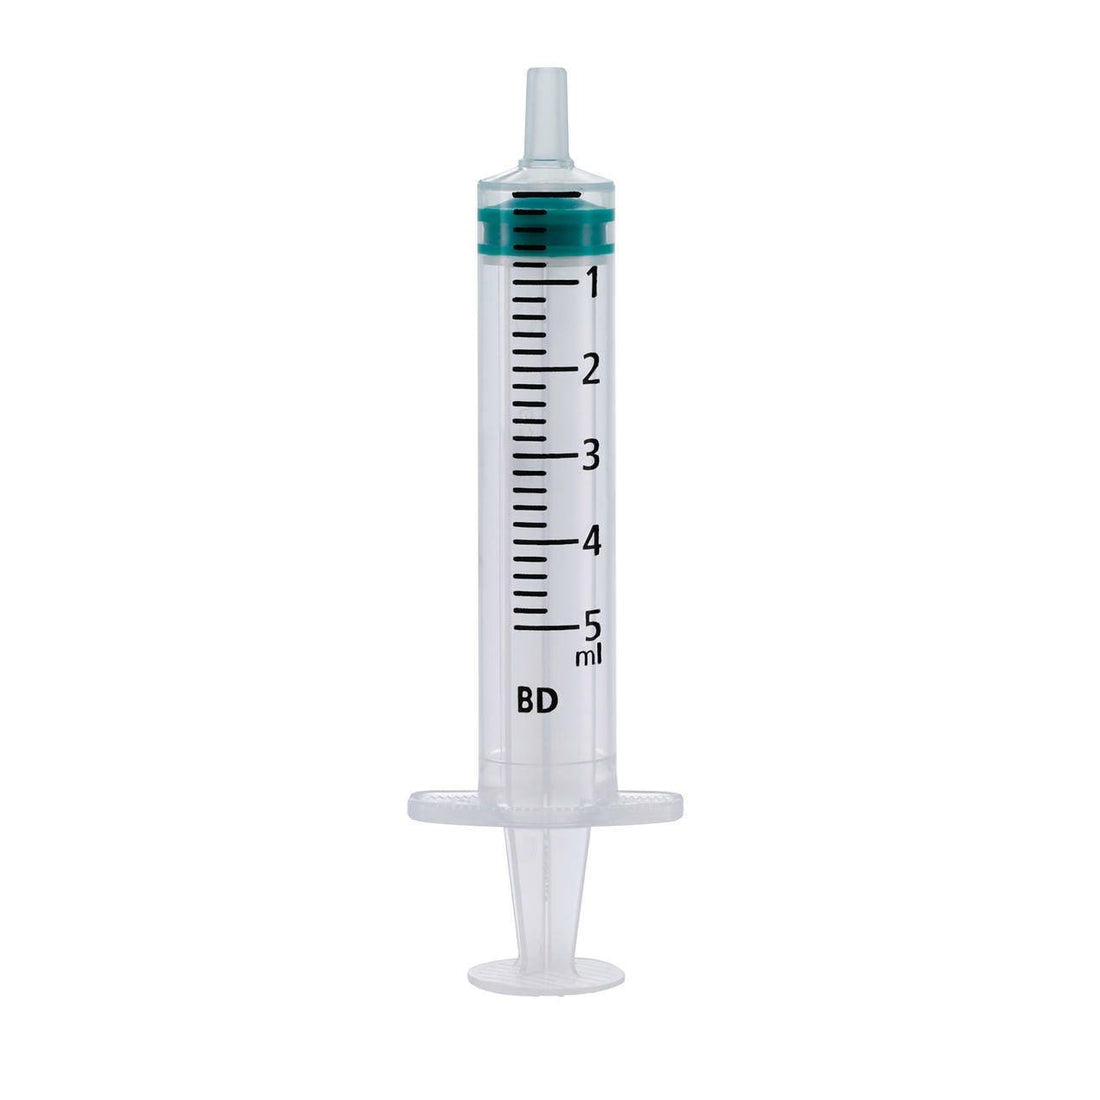 BD Emerald Hypodermic Syringe, Luer Slip Concentric 5ml - 100pcs